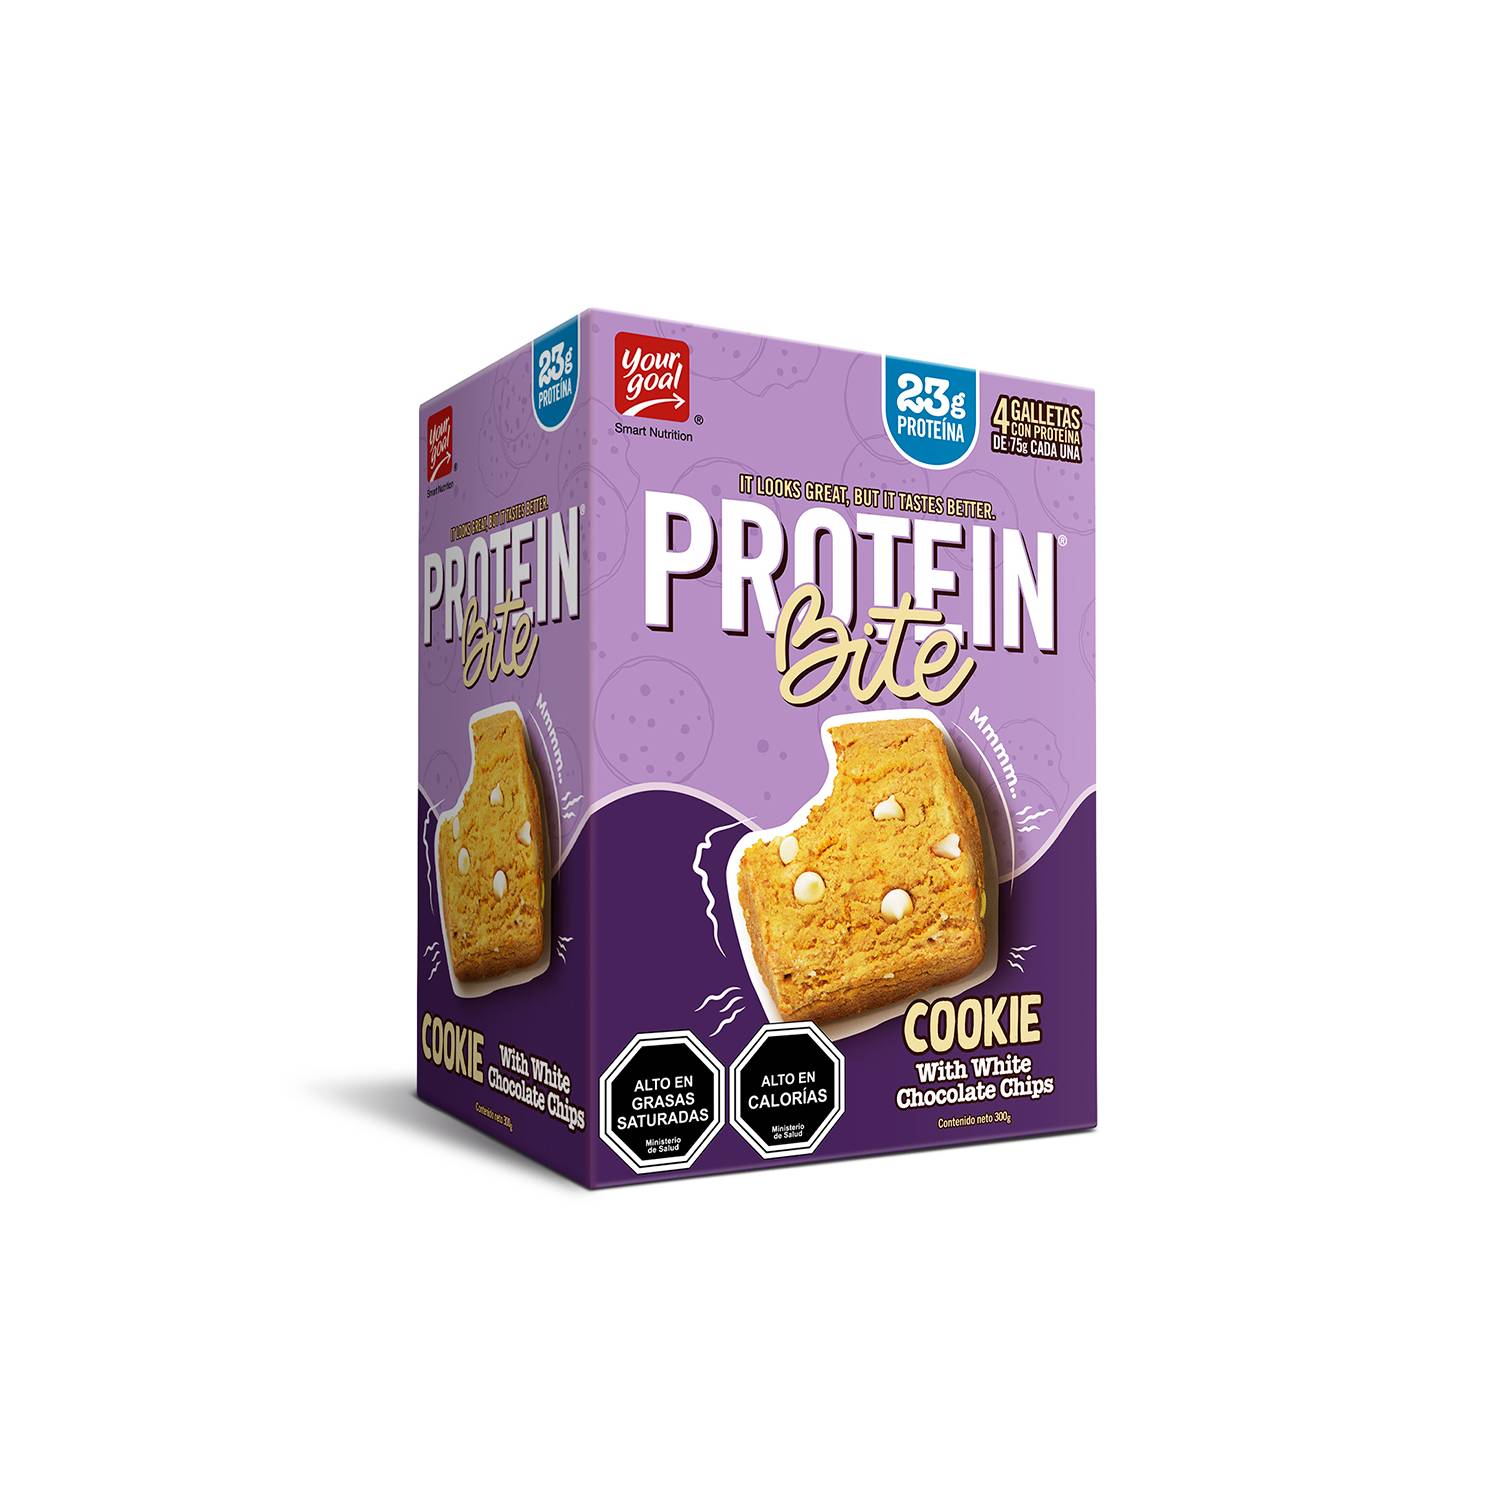 Galleta Protein Bite con Chips Chocolate blanco 23g proteína